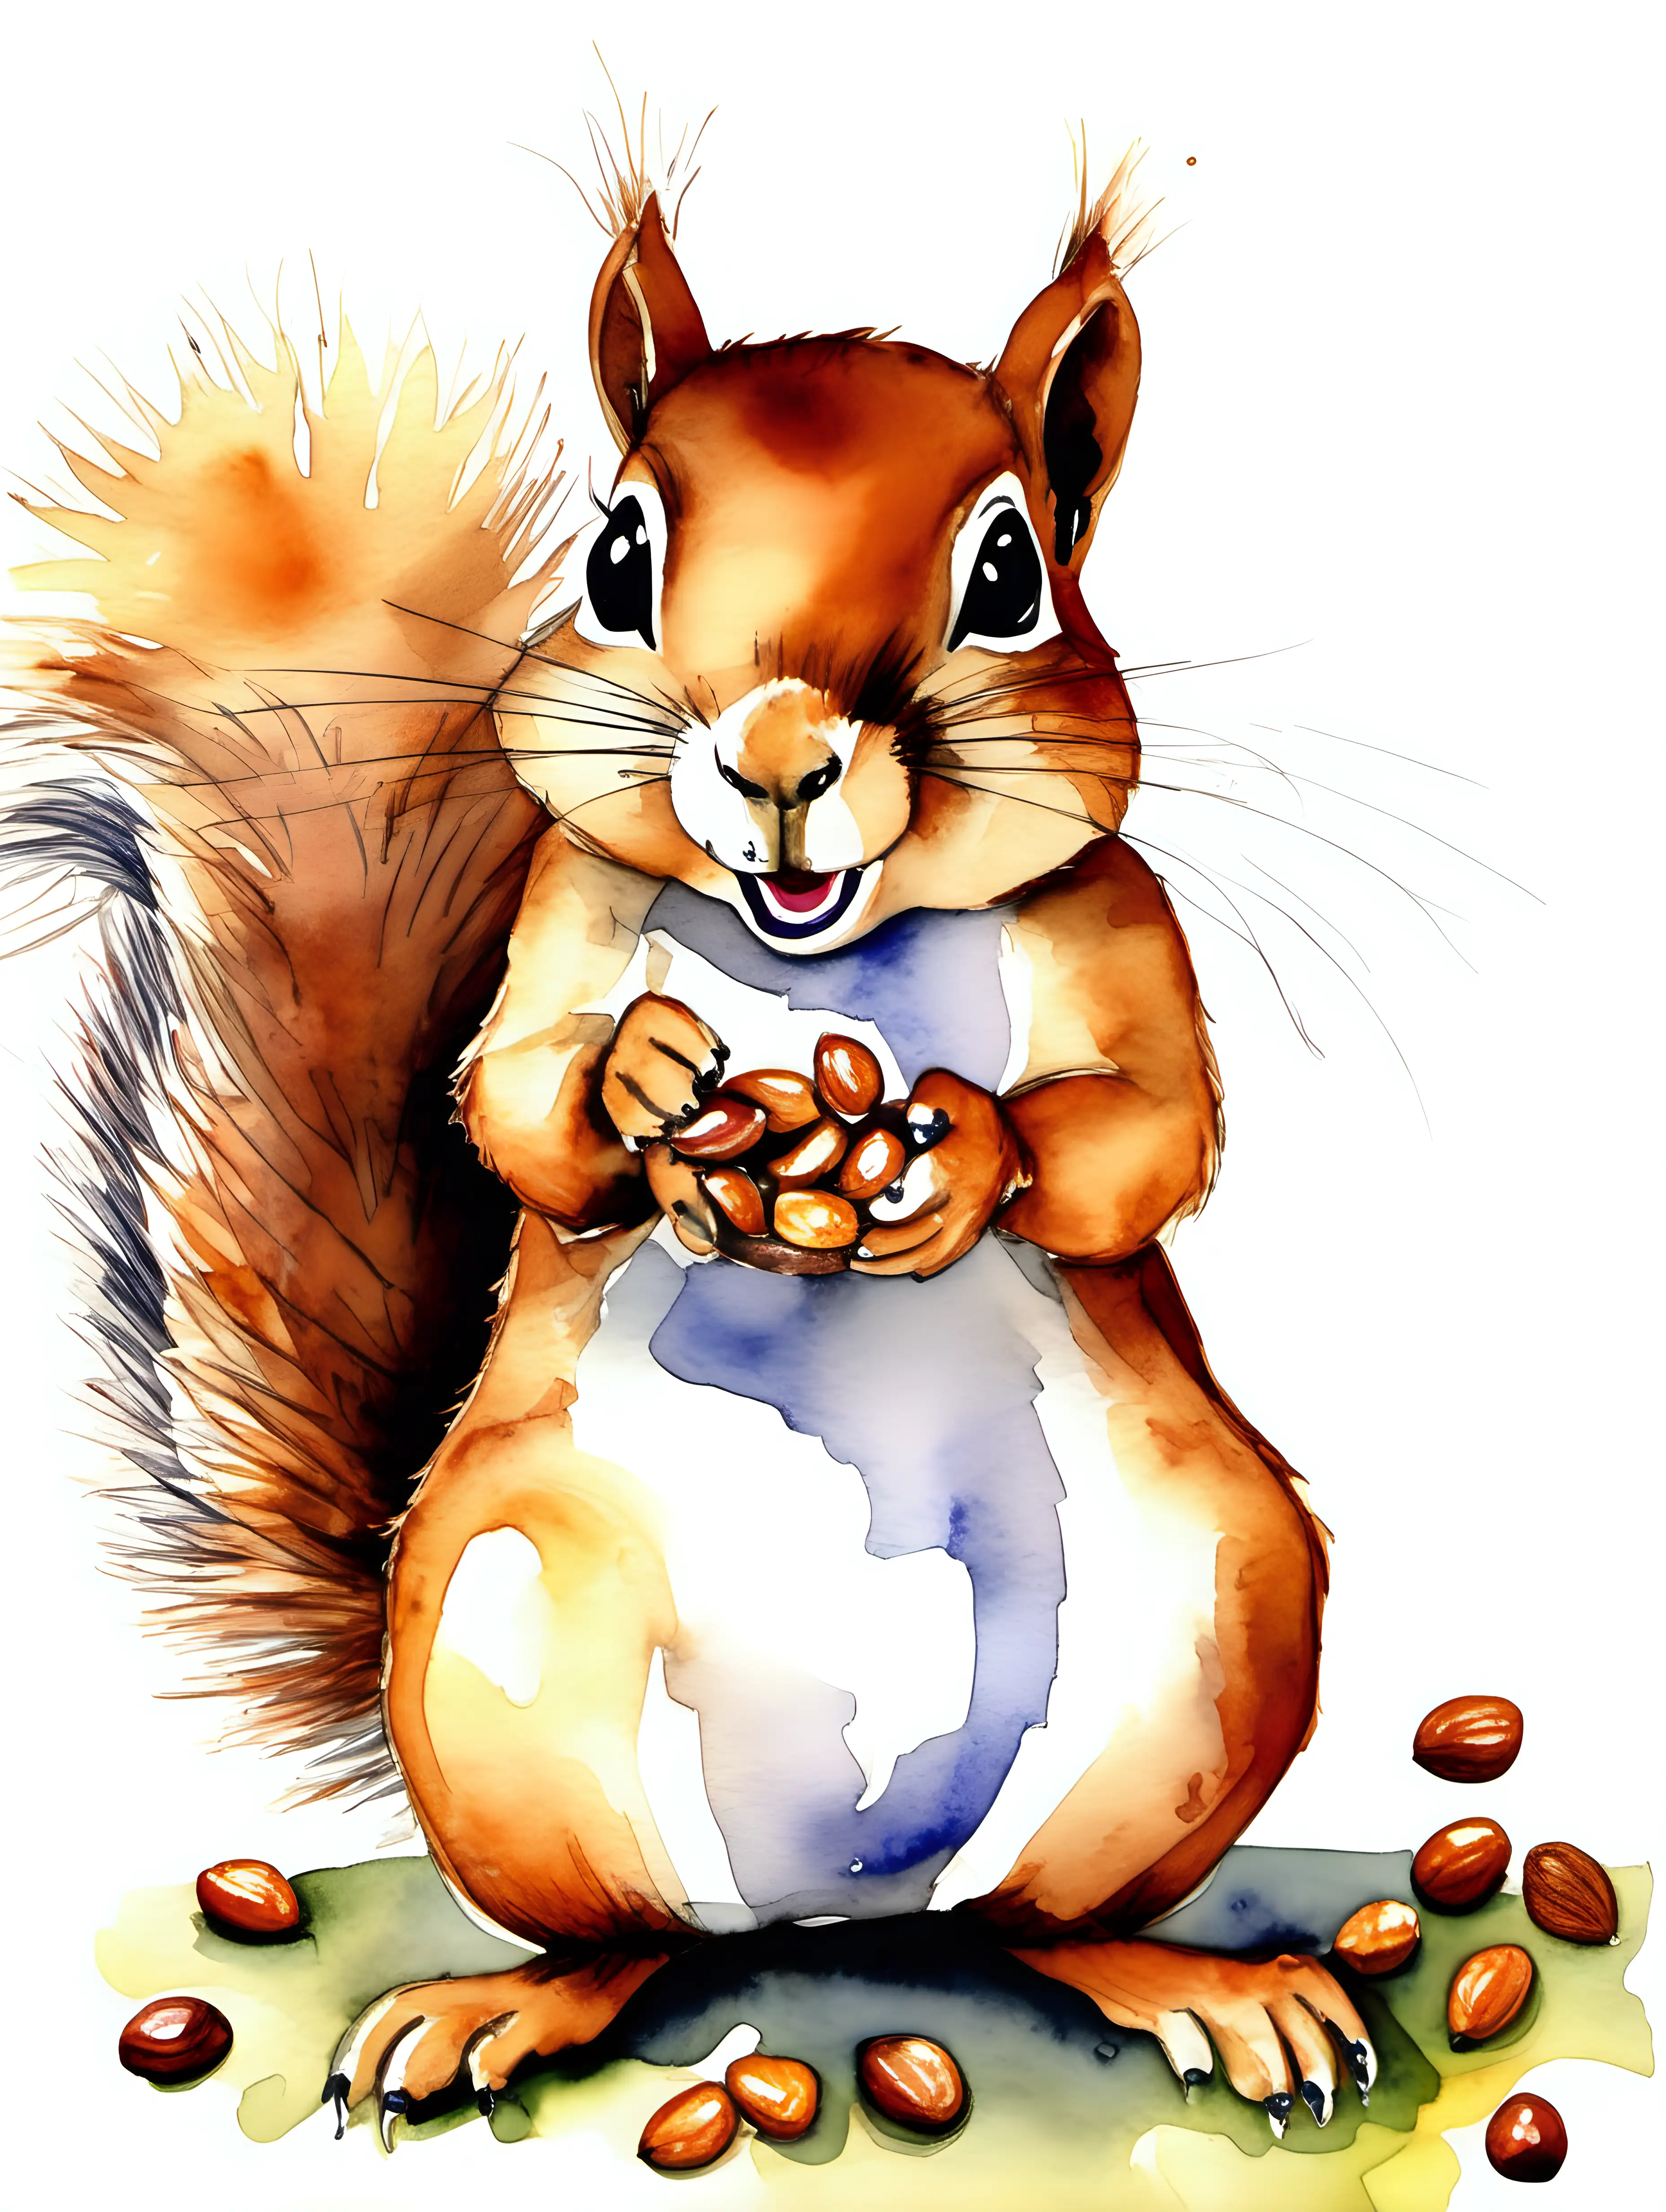 Cute, Fat squirrel, comical, cheeks full of nuts, watercolour